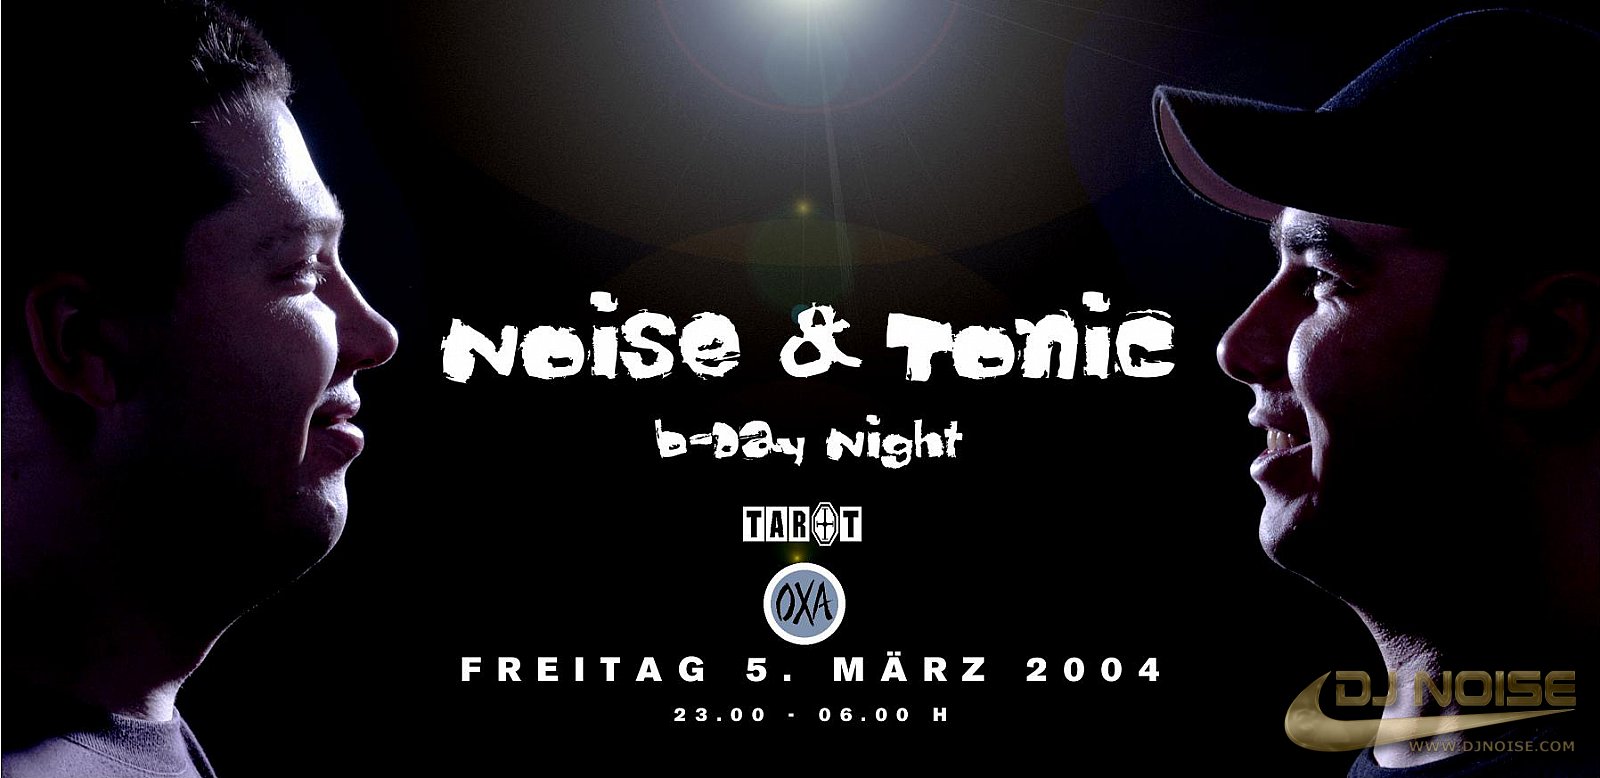 2004.03.05 - Noise & Tonic - B-Day Night - OXA (Front) - 2004 Flyers